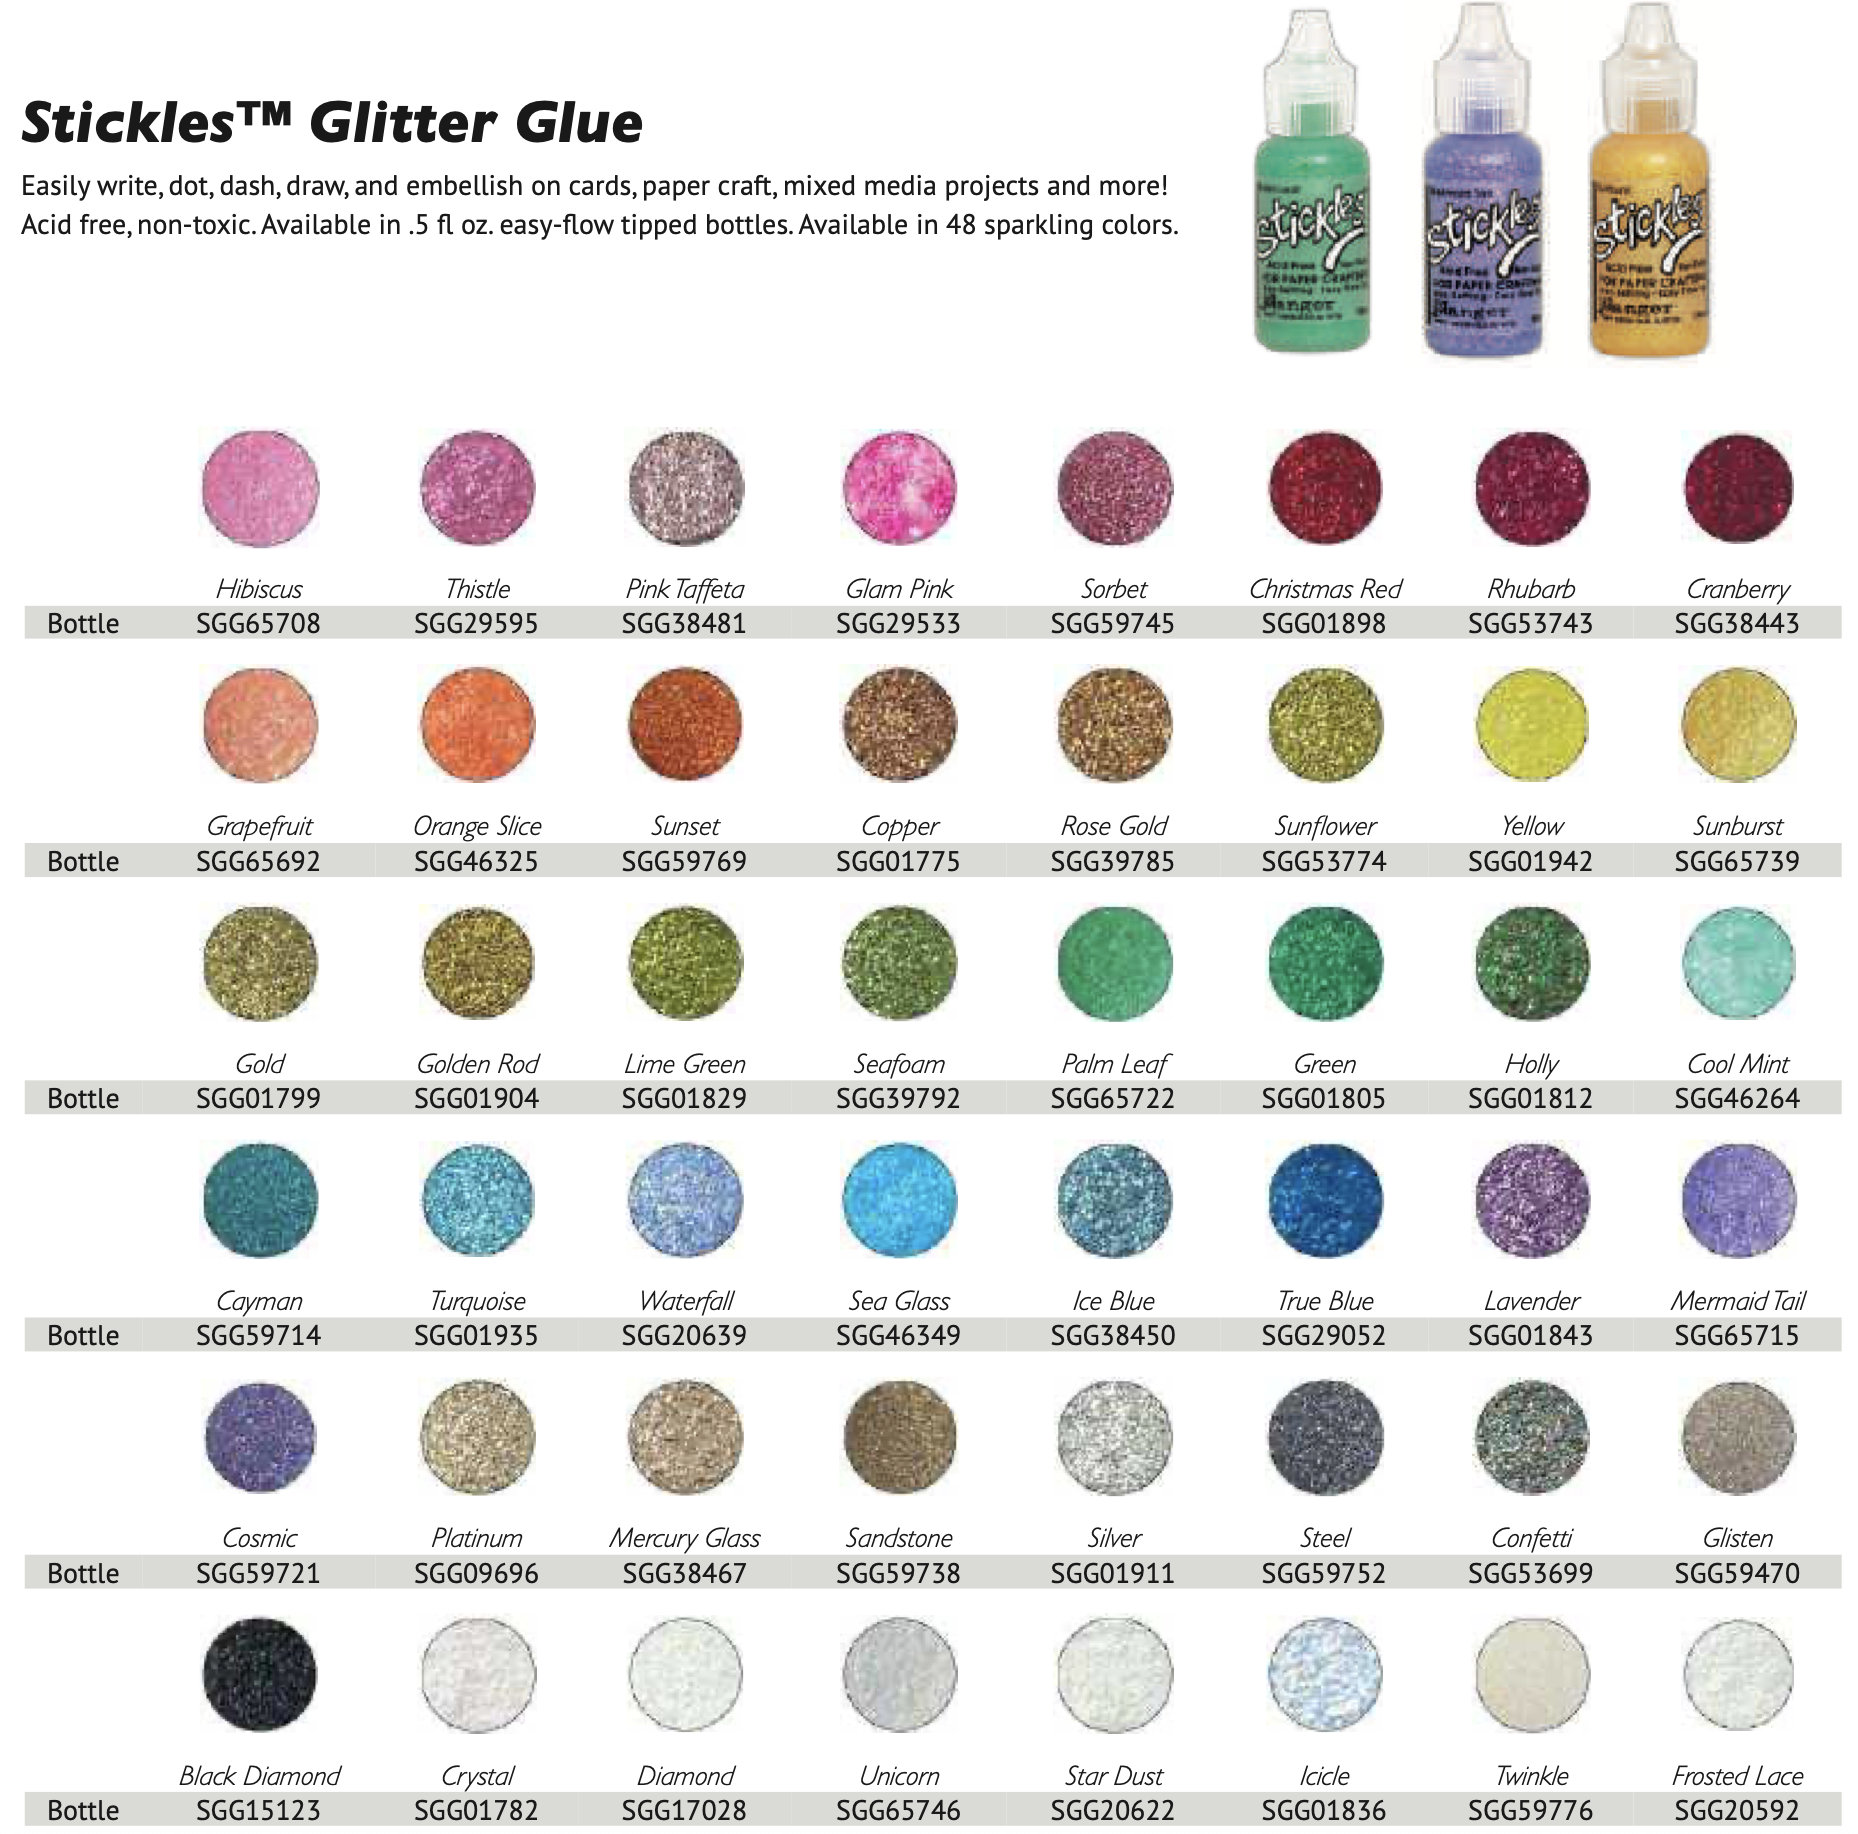 Dovecraft Glitter Glue 20ml Craft Essentials Pastels Arts and Crafts 